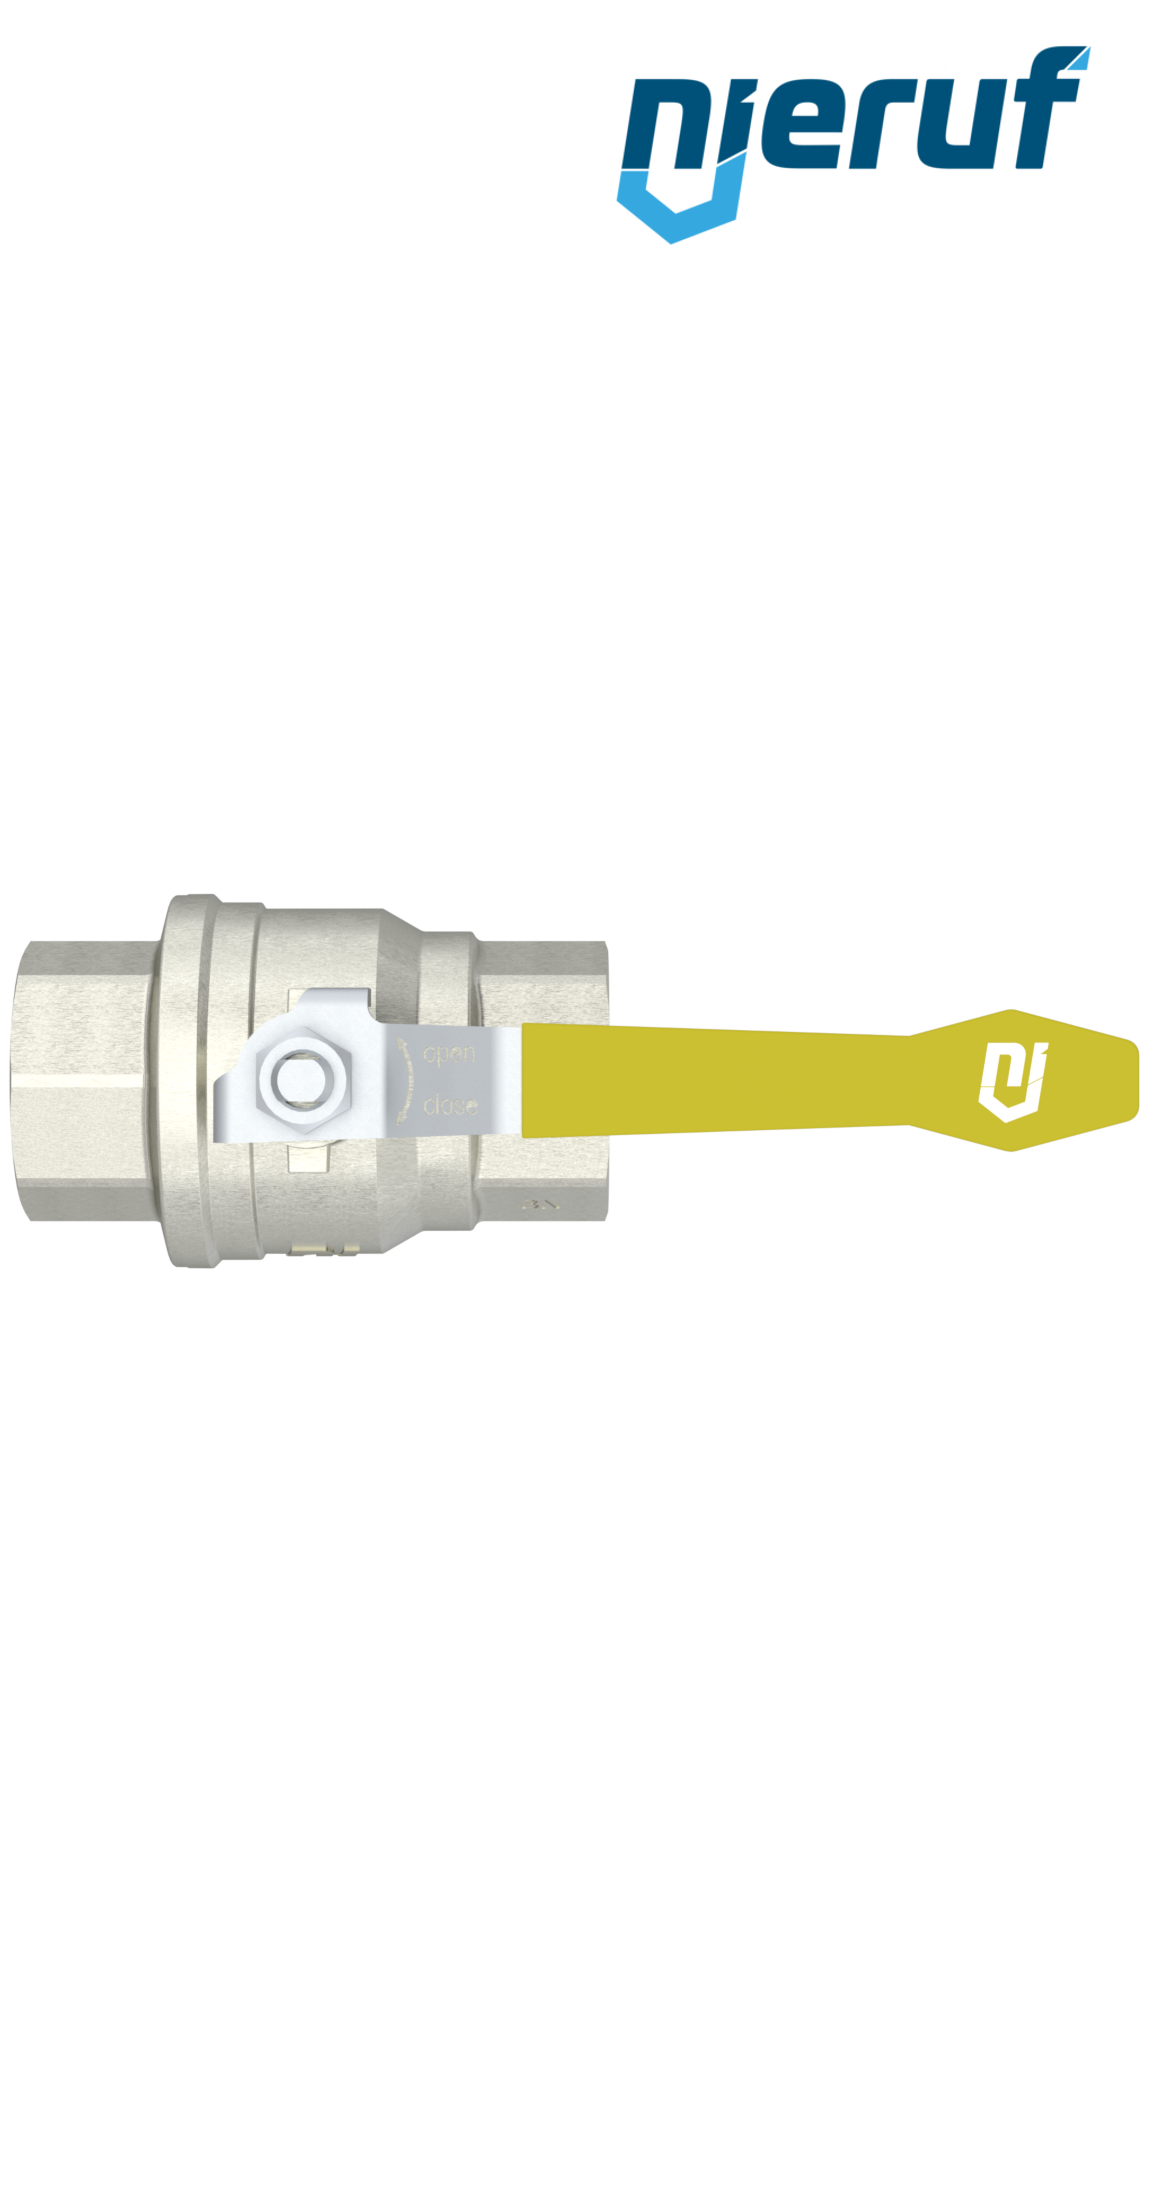 brass ball valve for gas DN25 - 1" inch GK14 female thread